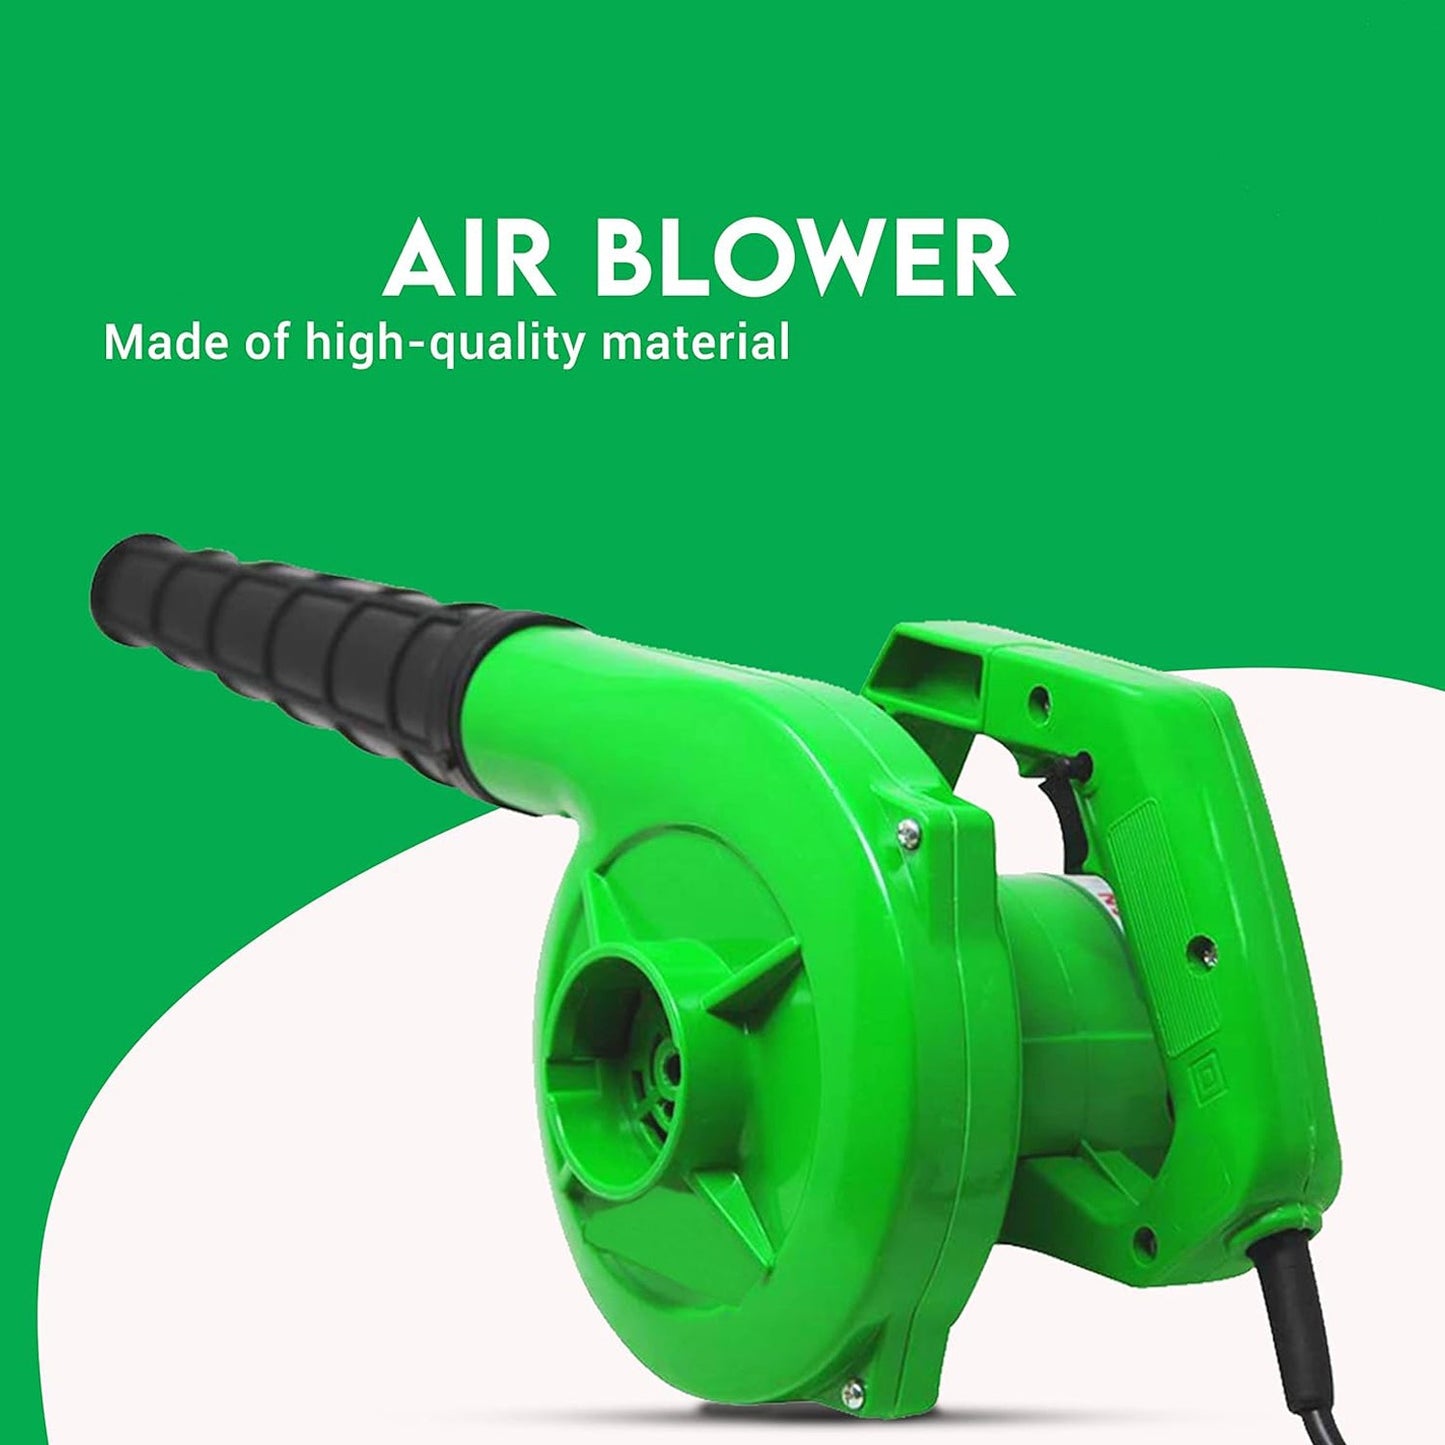 3158 650V Blower Portable rifel Range Heavy Duty air Blower, Electric Air Blower for Home/Office/Car/Pc/Computer Dust/Garage/Patio/Garden Leaf/Trash Cleaning  (350W, 2.3 m3/min, 13000 RPM, Green)